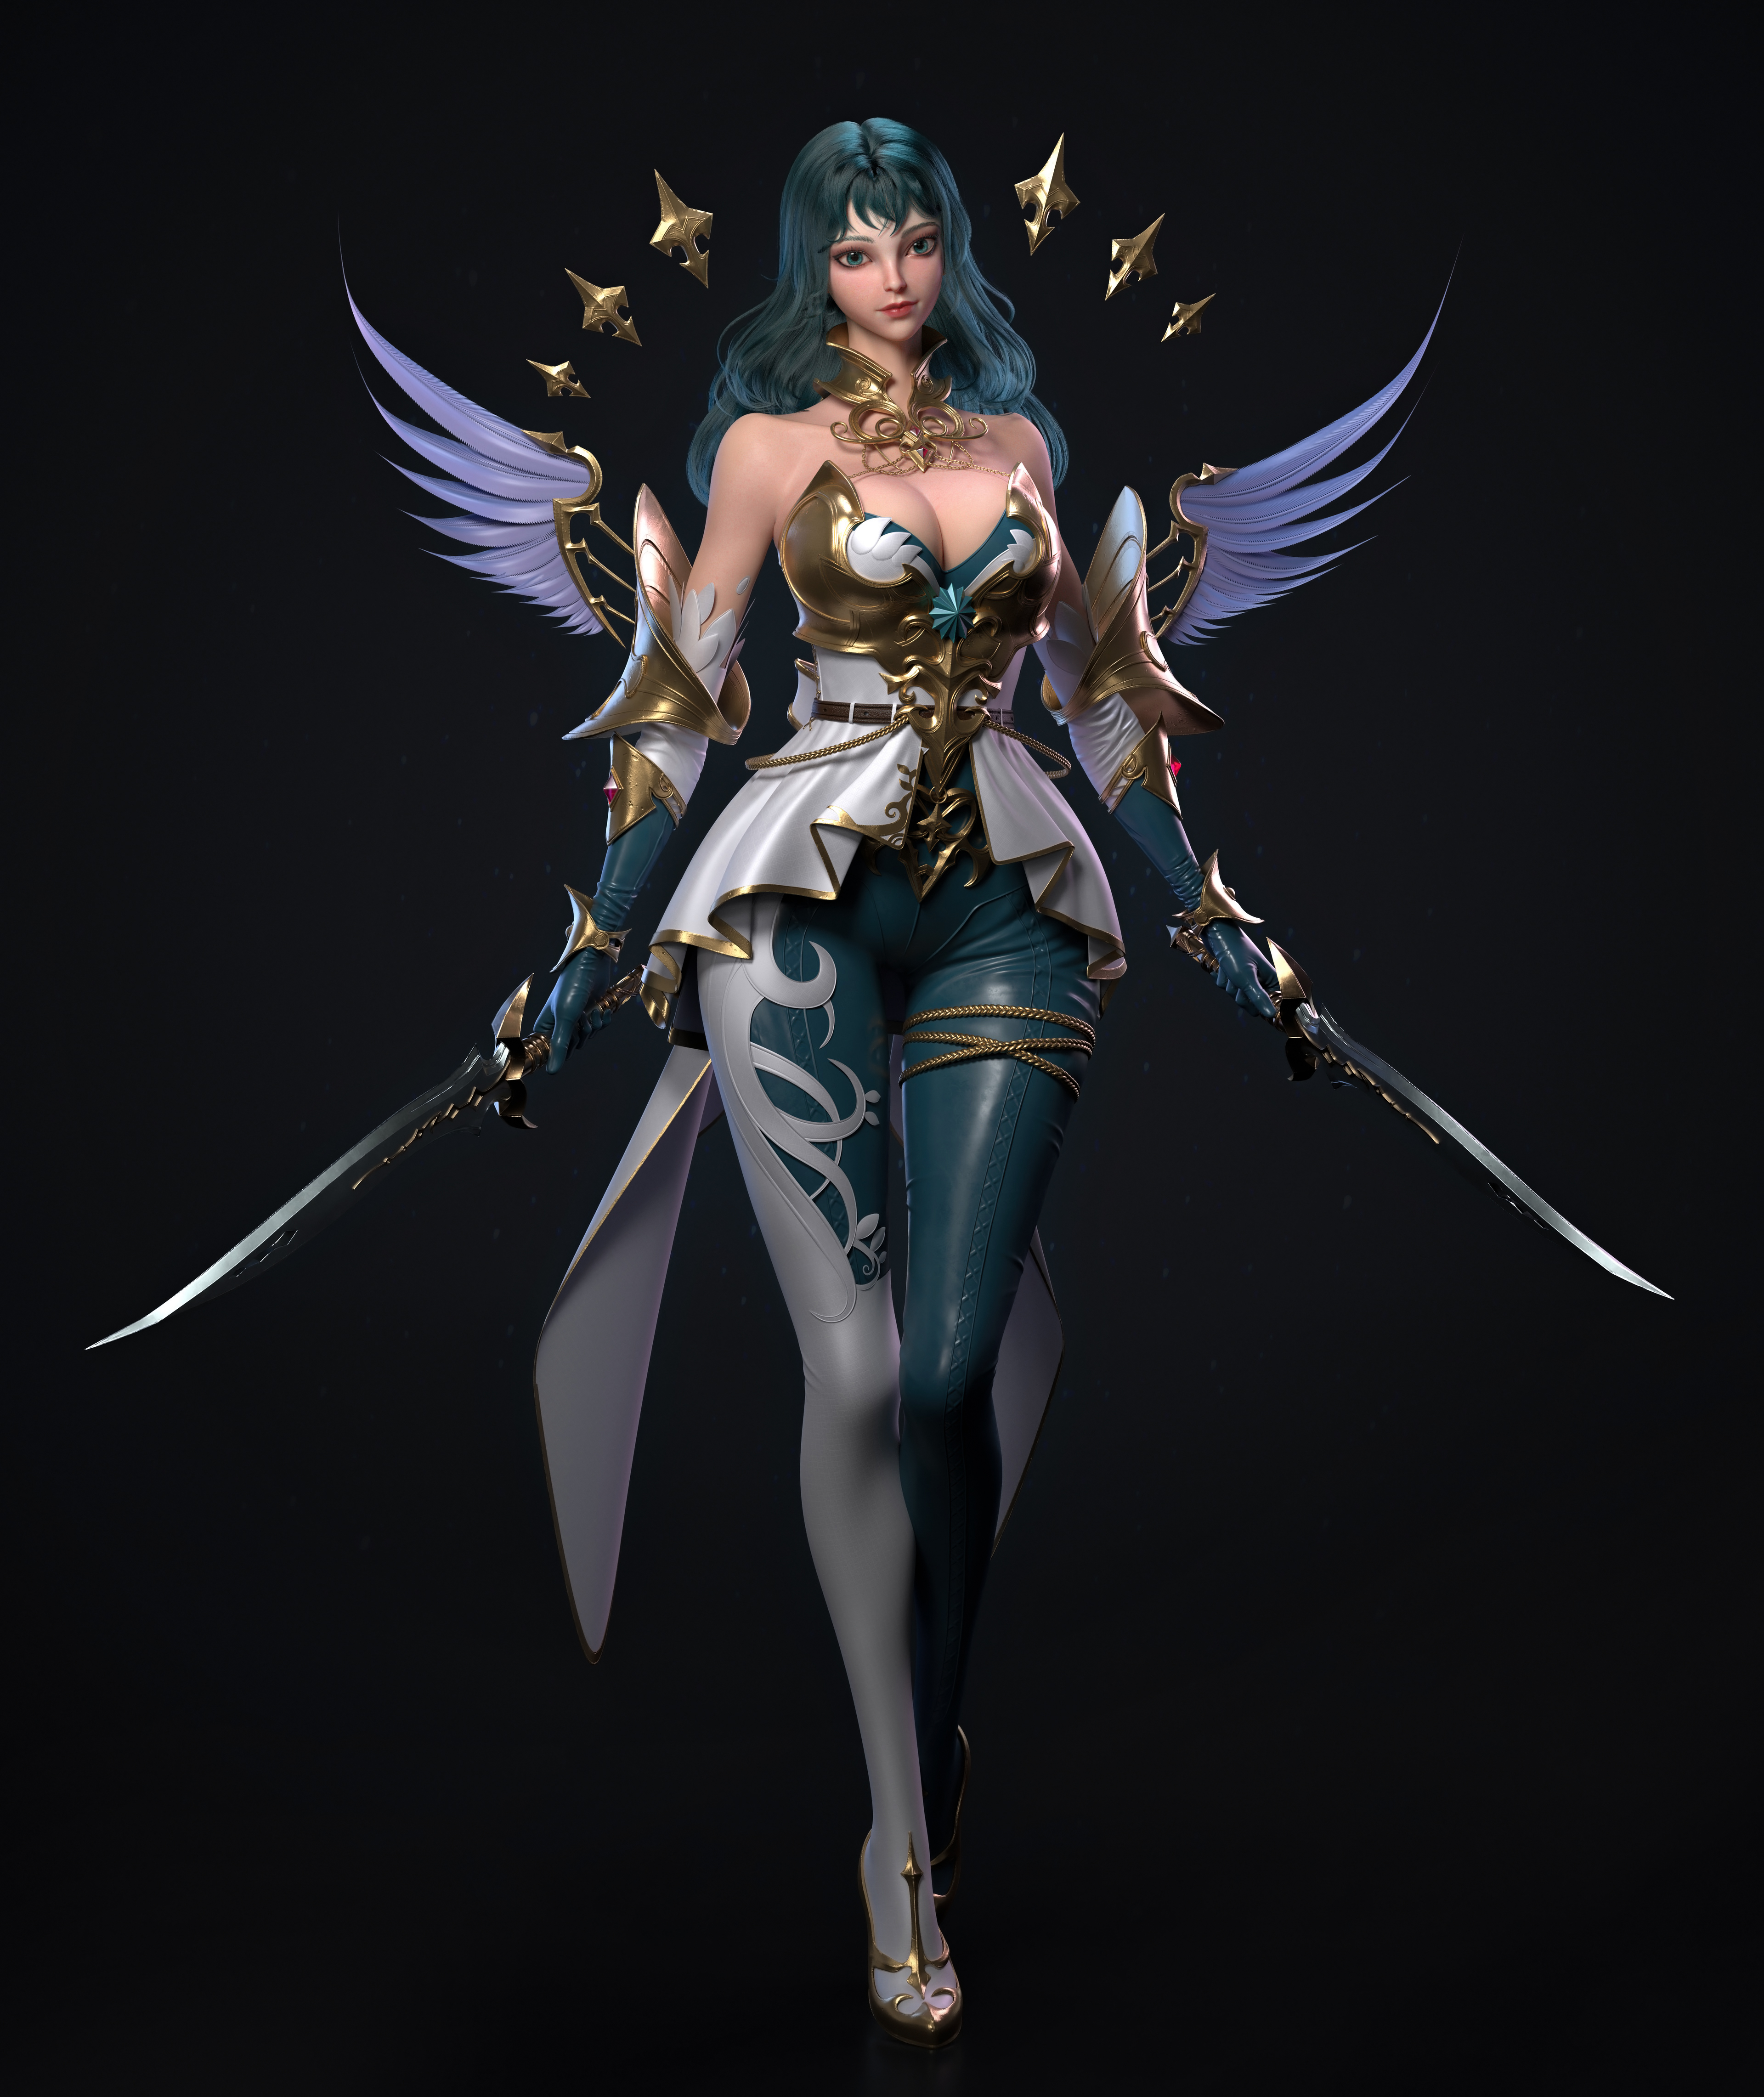 General 3840x4565 Cifangyi CGI women blue hair warrior armor wings sword weapon simple background long hair turquoise hair turquoise eyes blue eyes